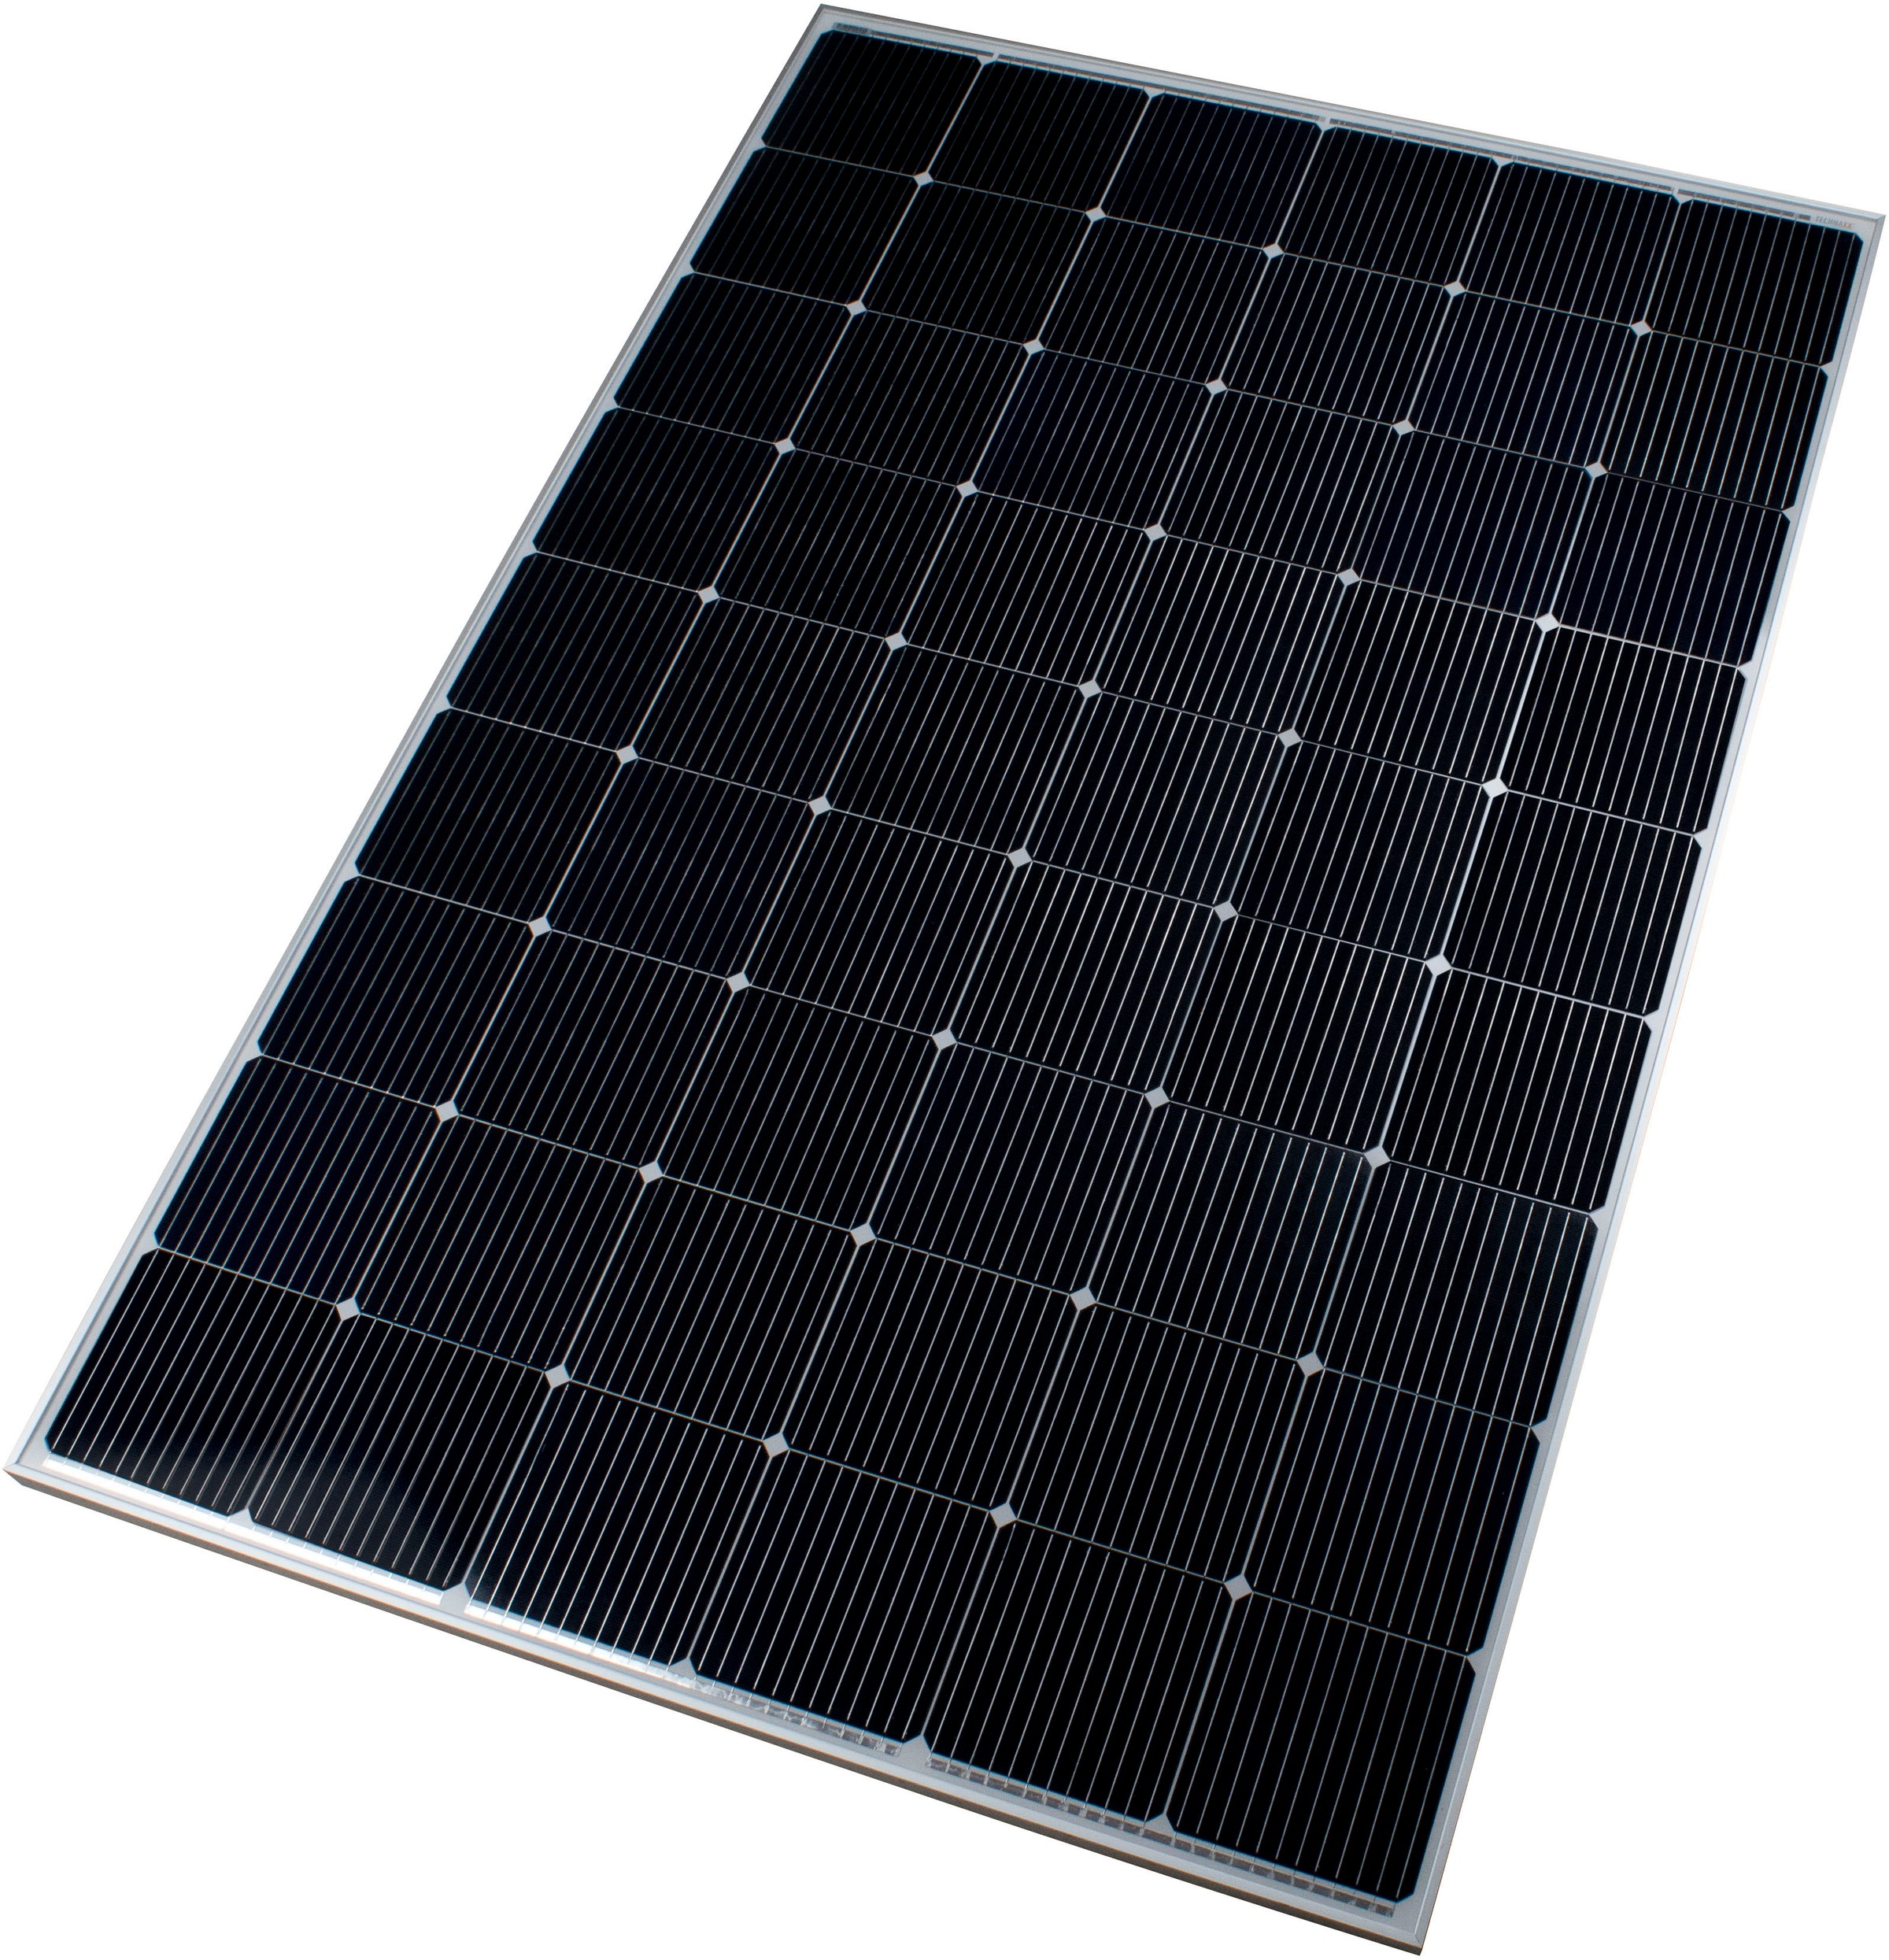 Solar Technik preiswert bestellen